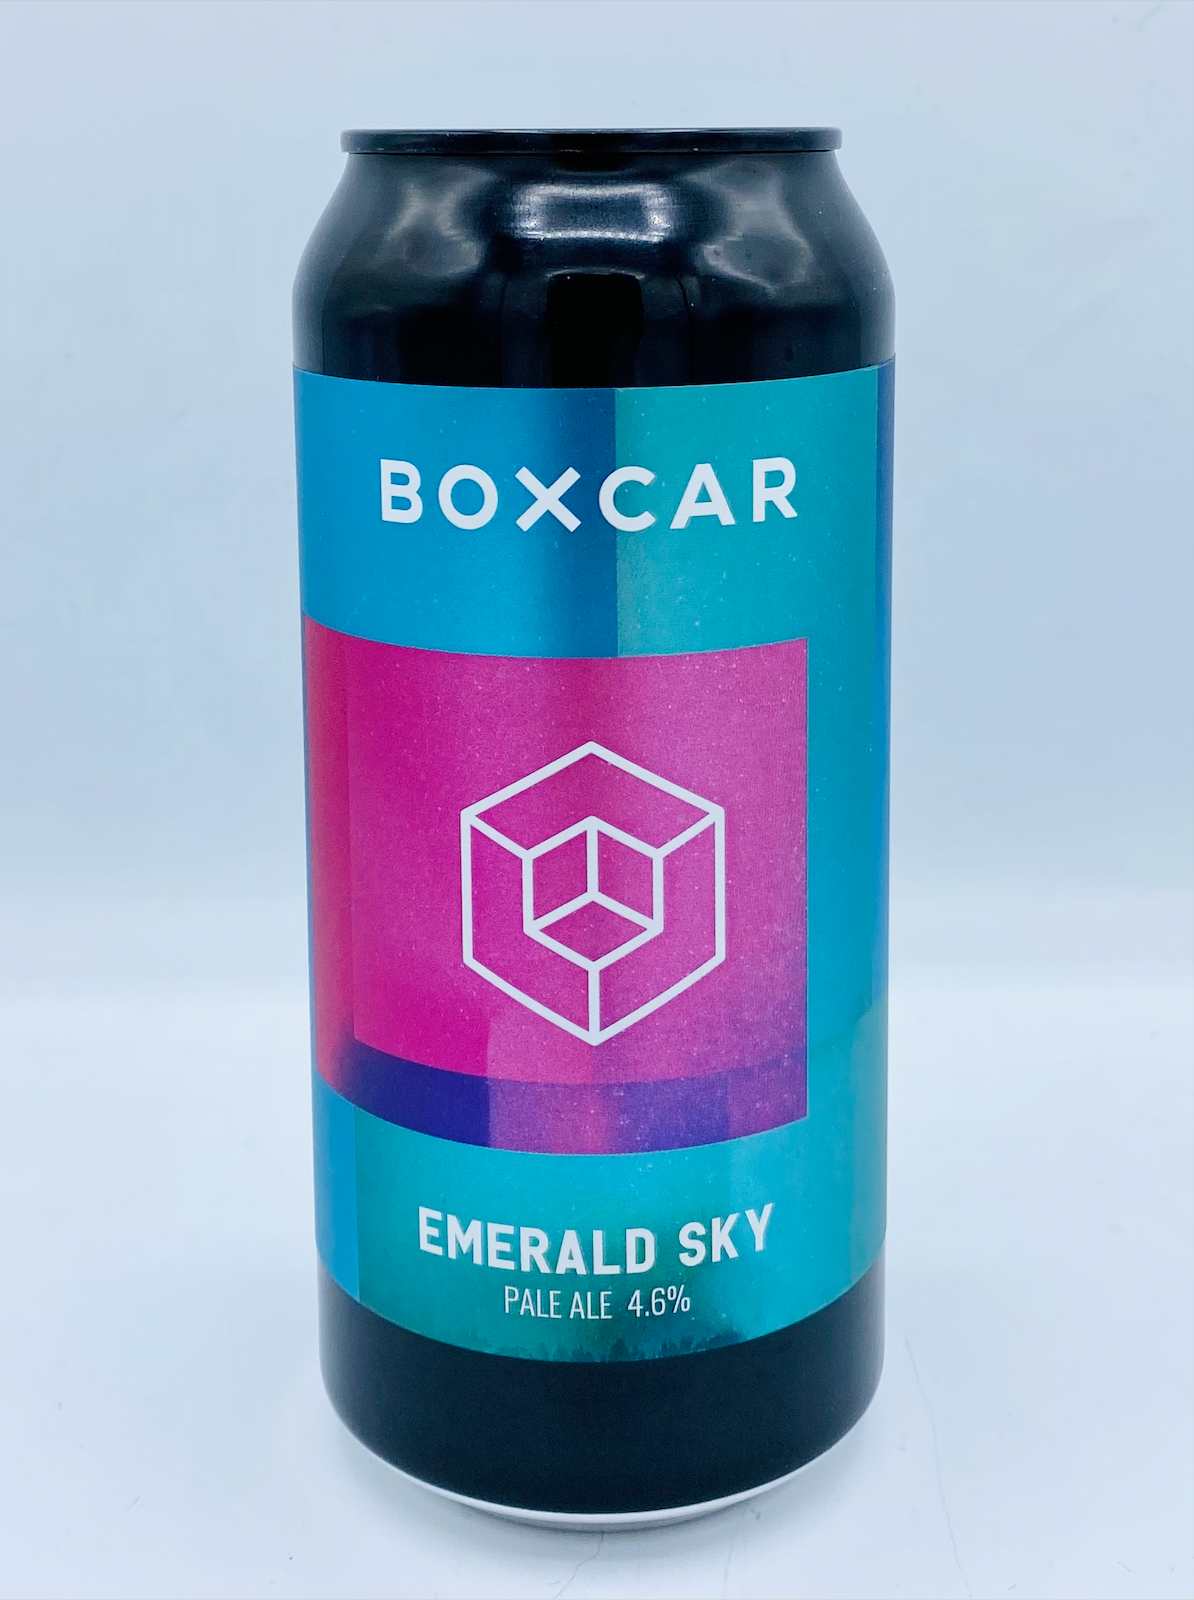 Boxcar - Emerald Sky 4.6%